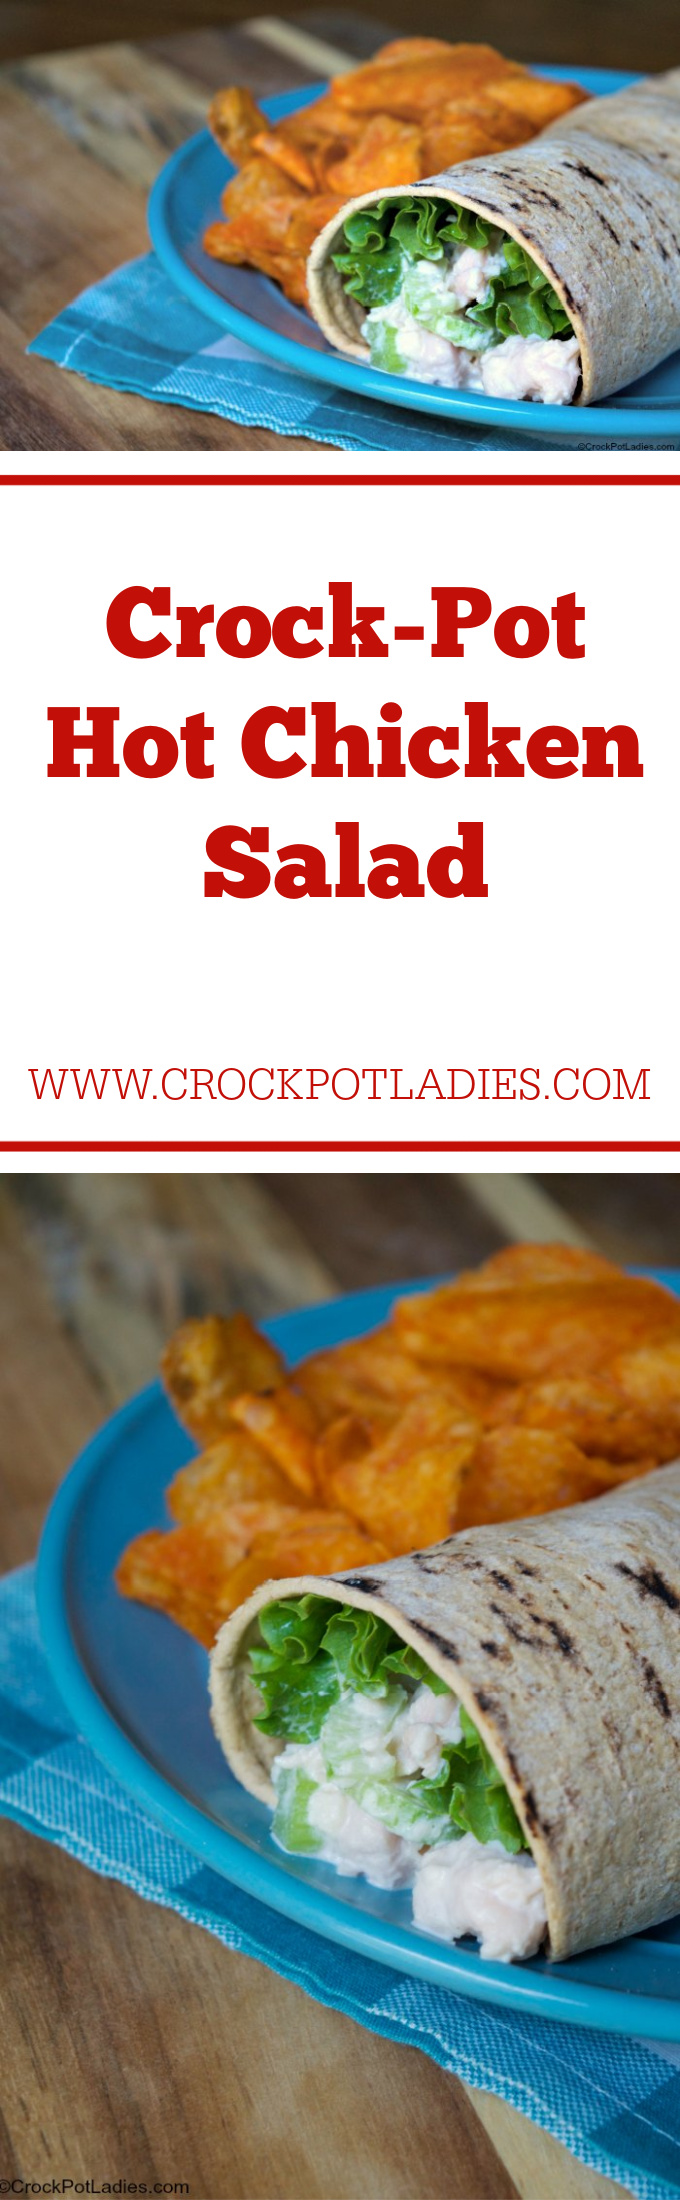 Crock-Pot Hot Chicken Salad